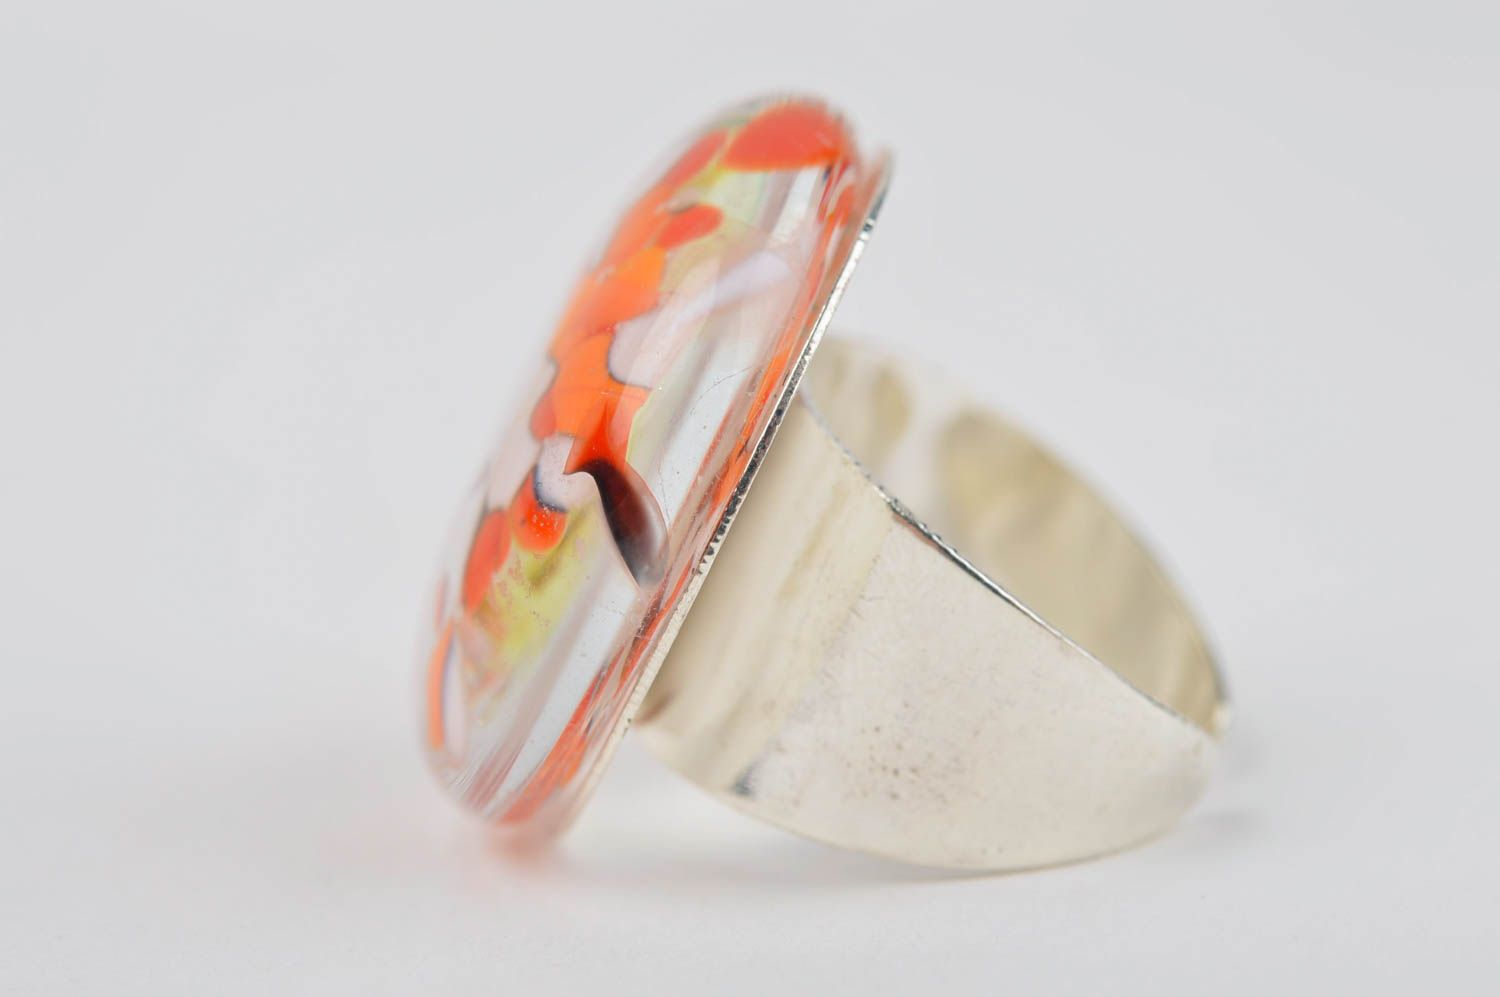 Beautiful handmade glass ring design artisan jewelry glass art gifts for her photo 2